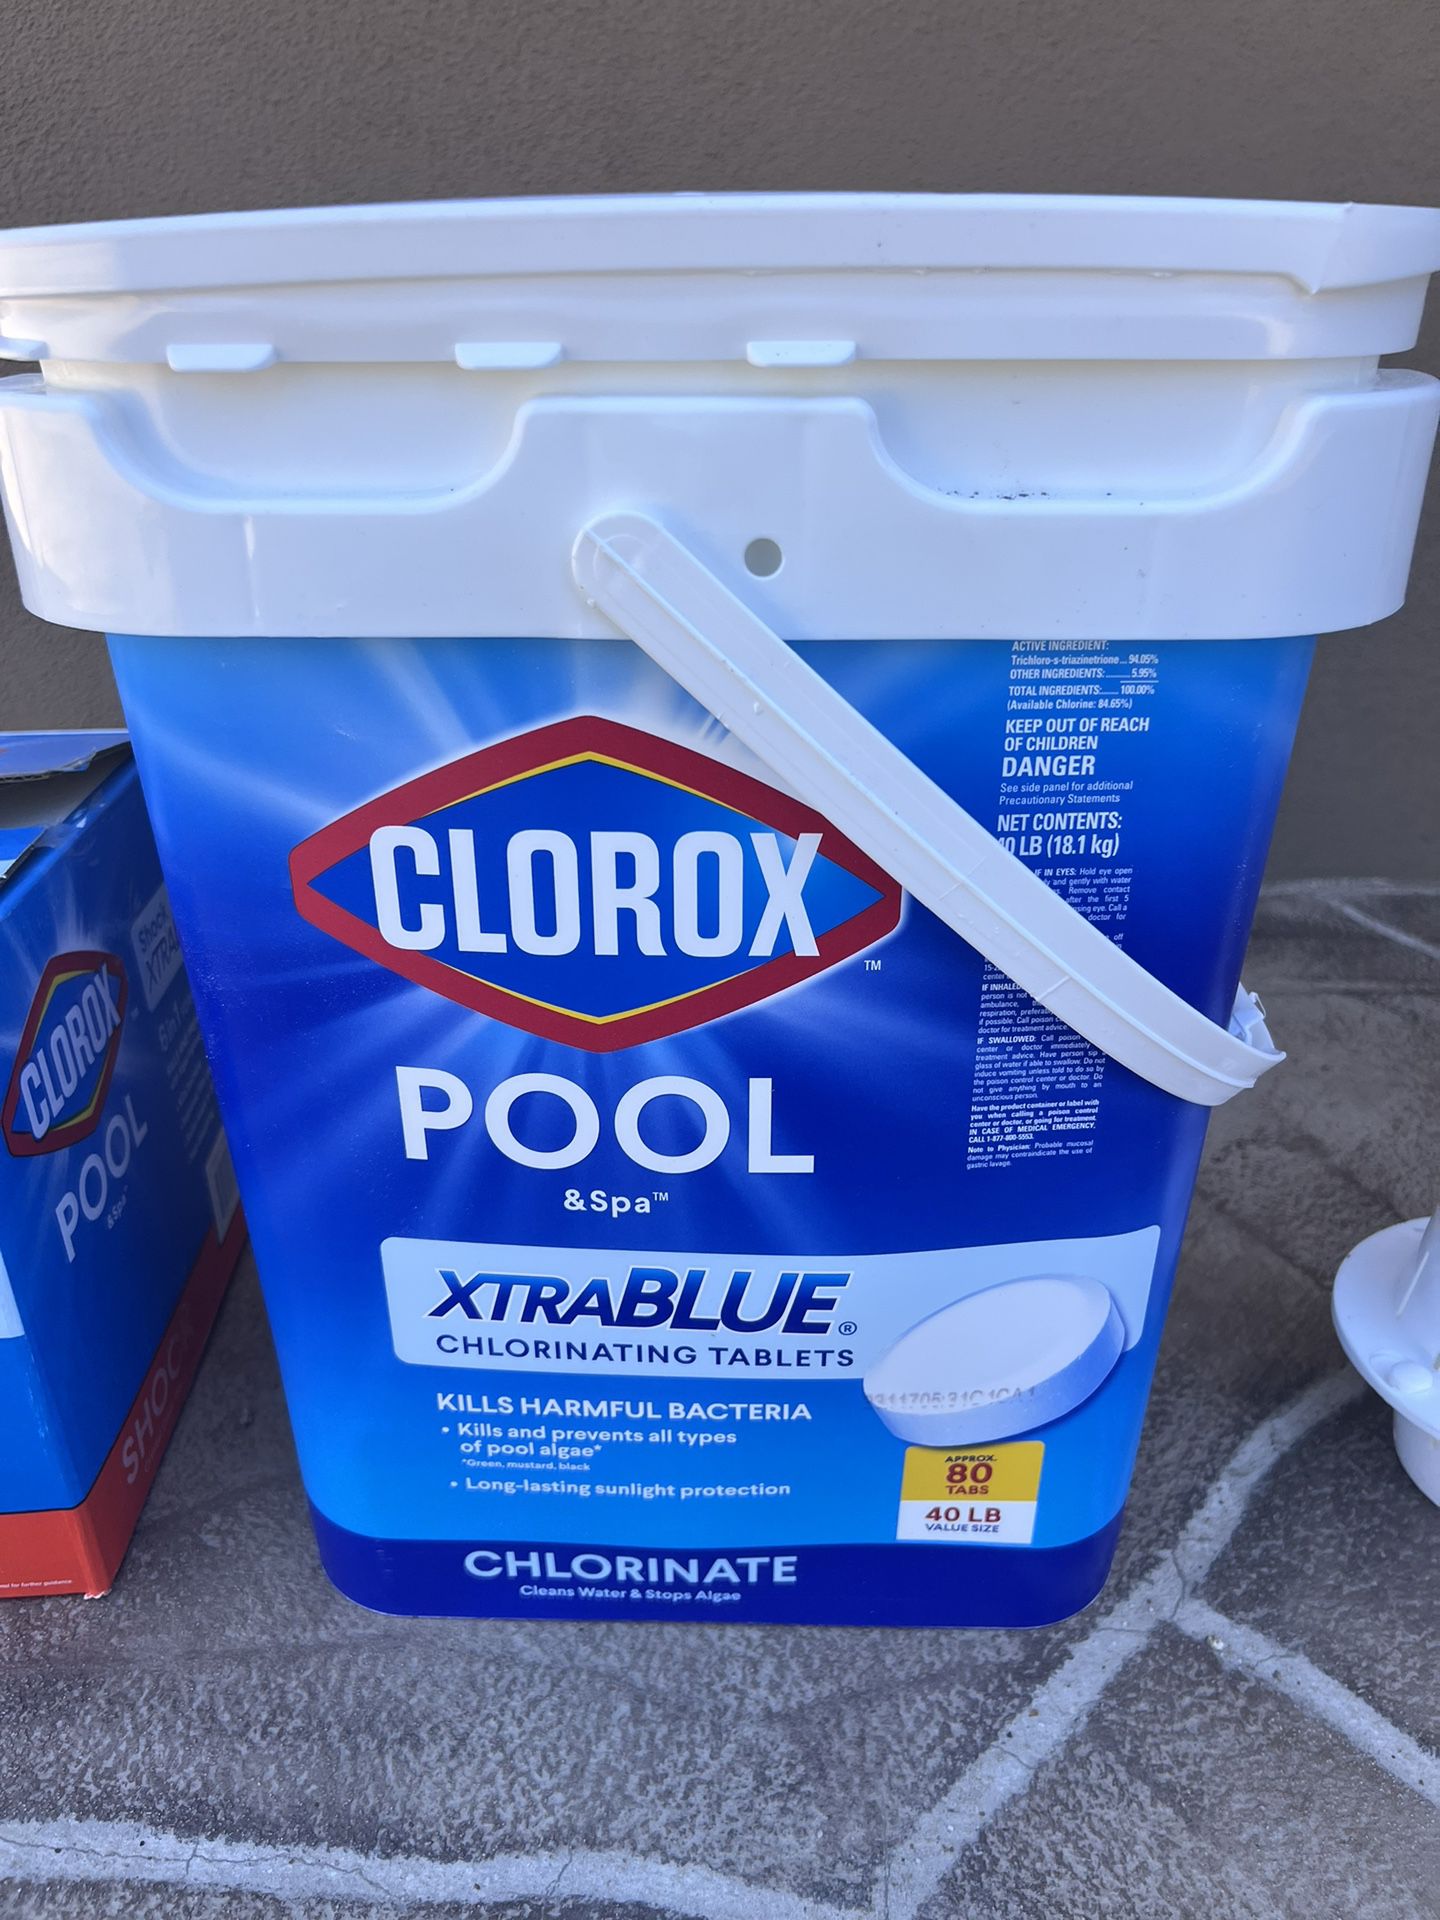 Chlorox Pool Chlorine Tablets, Shock and Dispensers